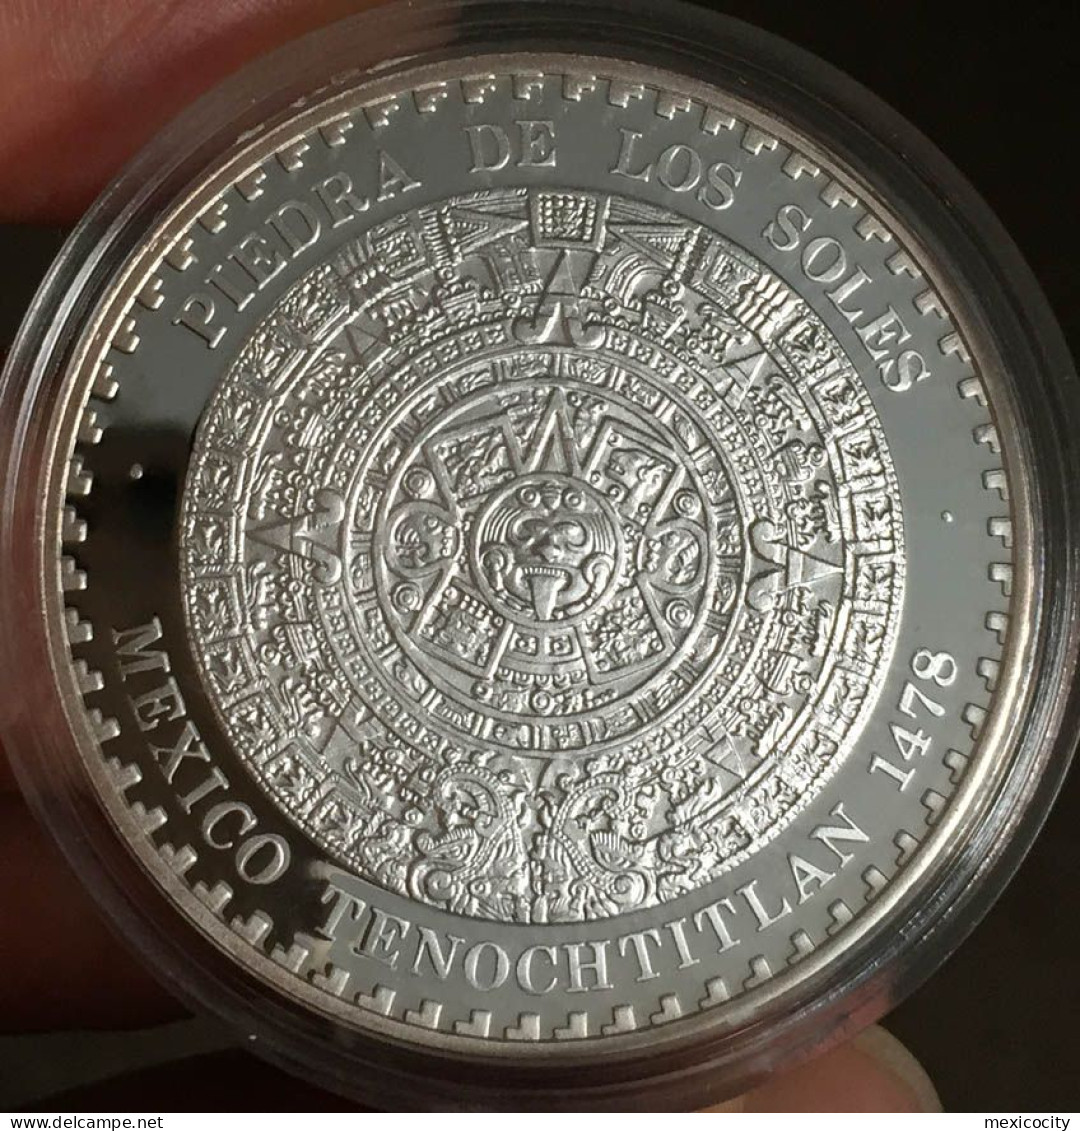 MEXICO Mint AZTEC CALENDAR & Old Coin Press .999 Silver Ounce PROOF Cond. Unc., In Capsule - México